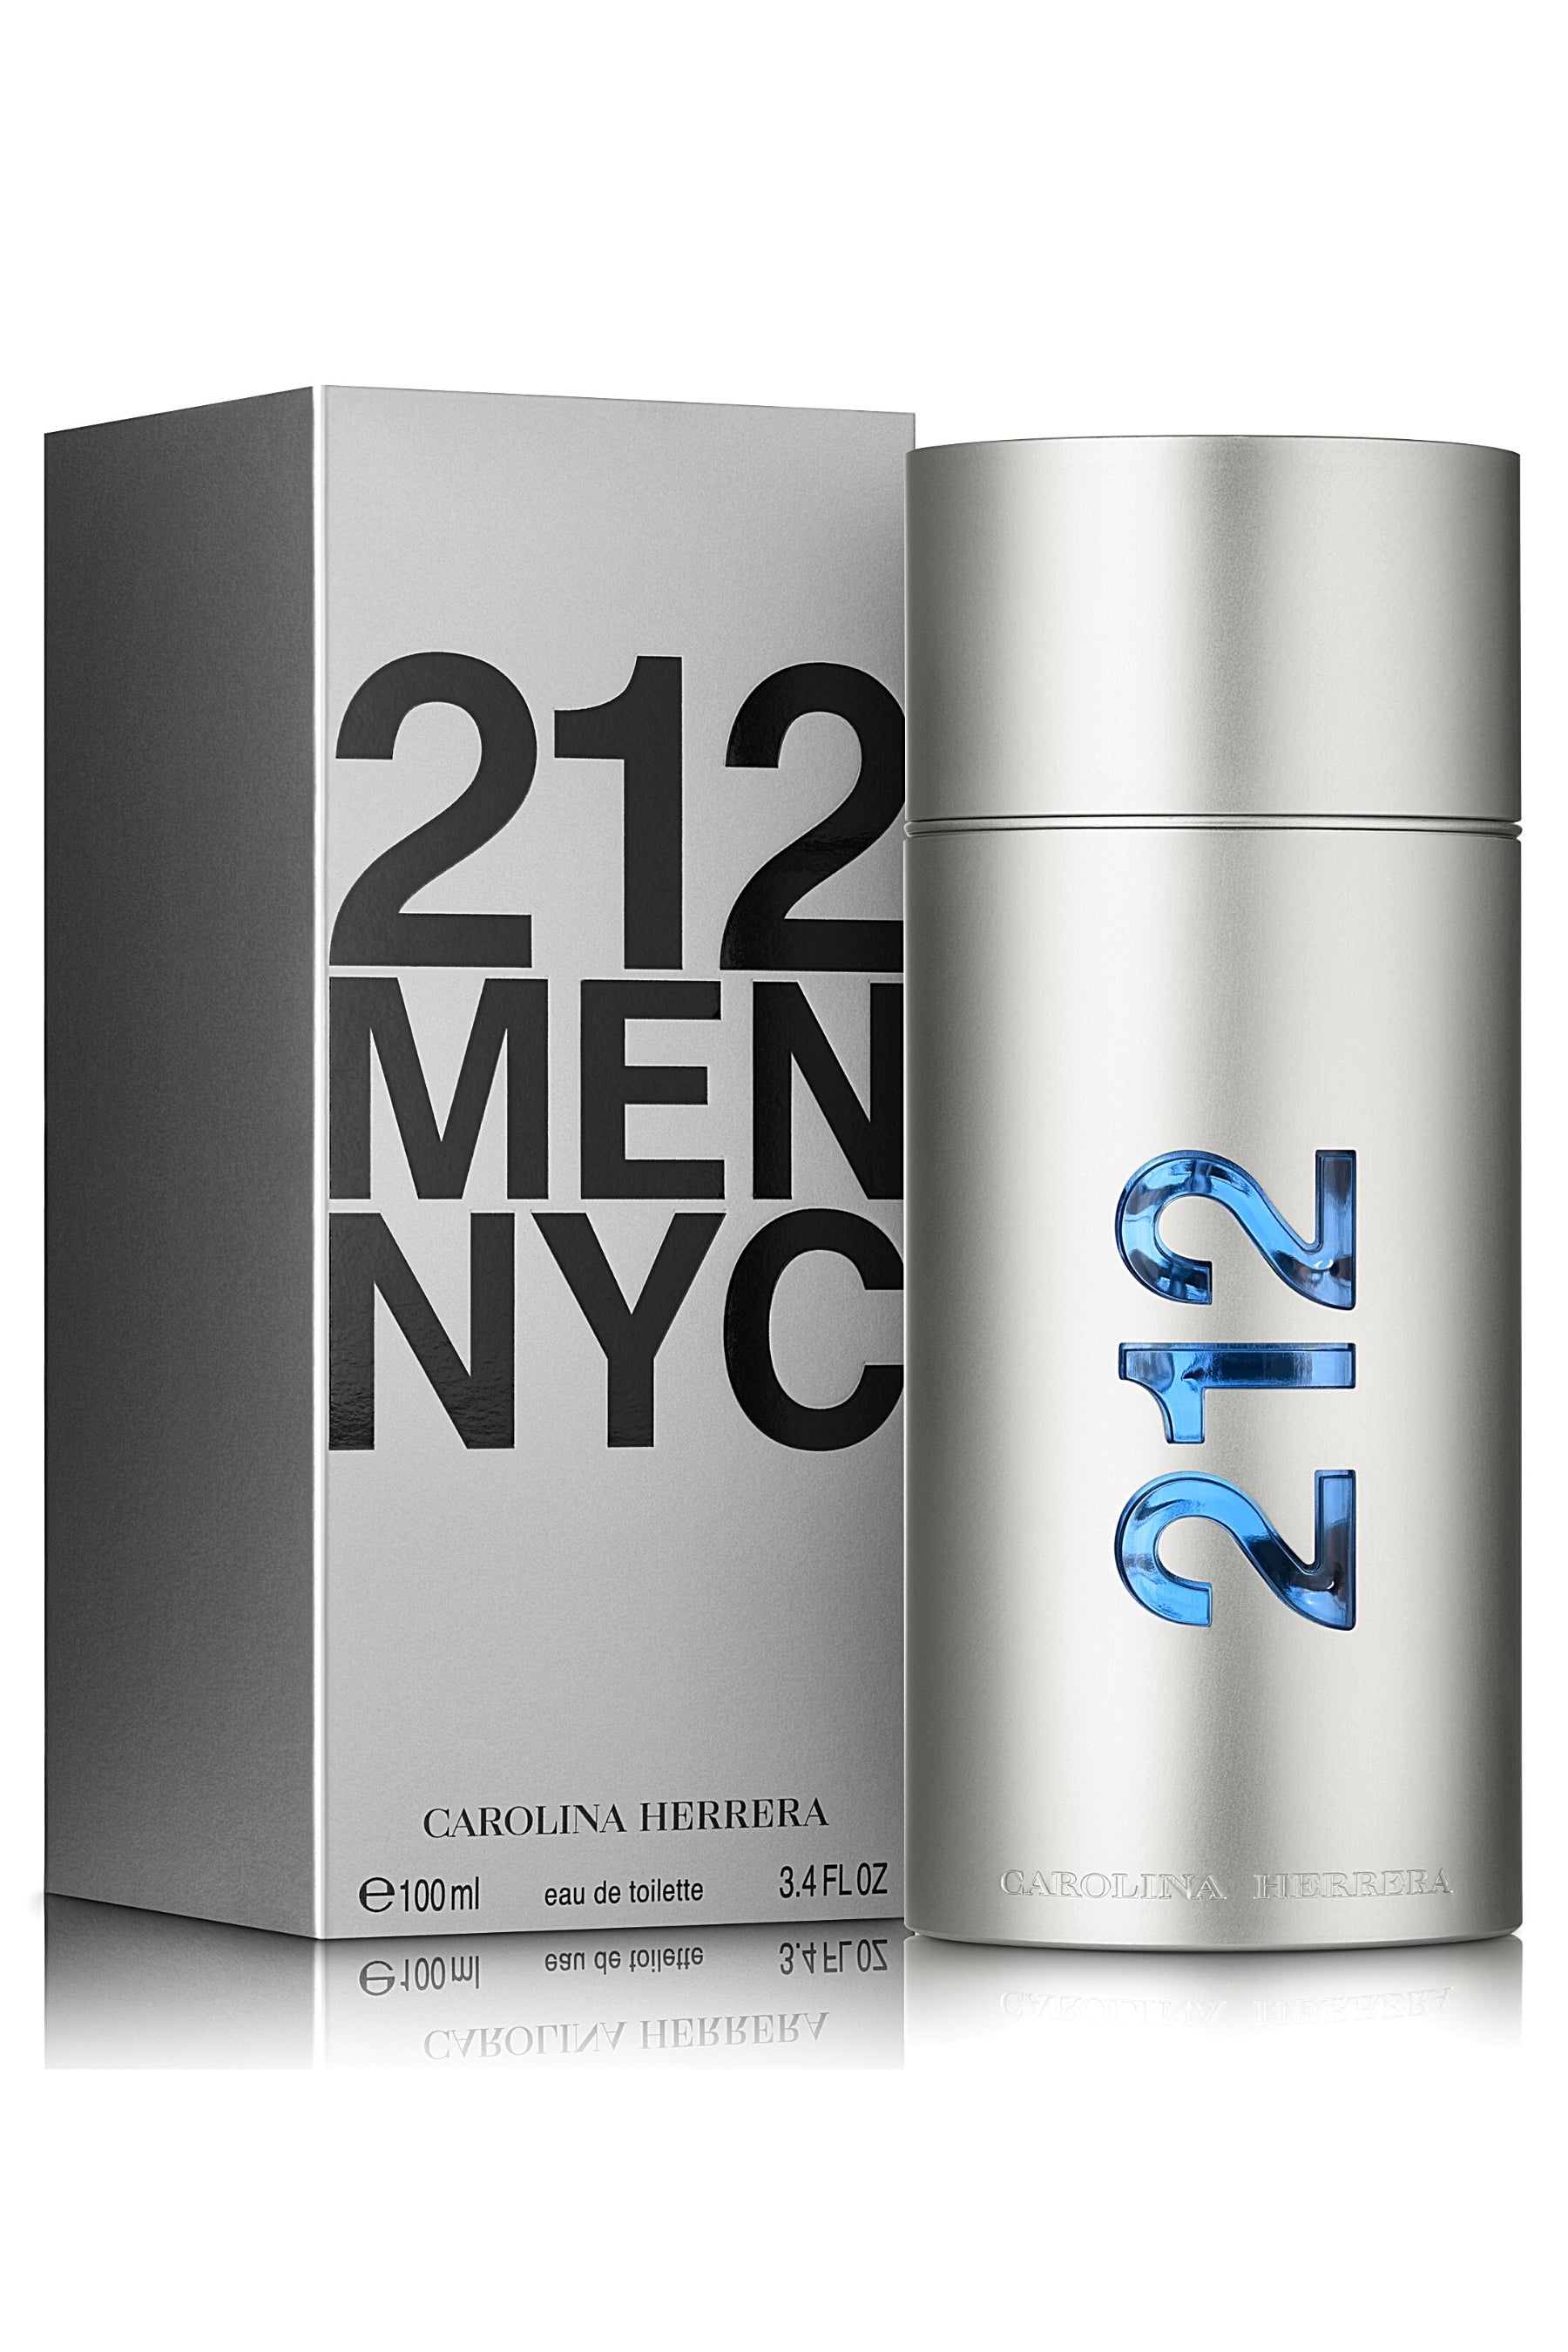 Carolina Herrera | 212 Men NYC Eau de Toilette - REBL